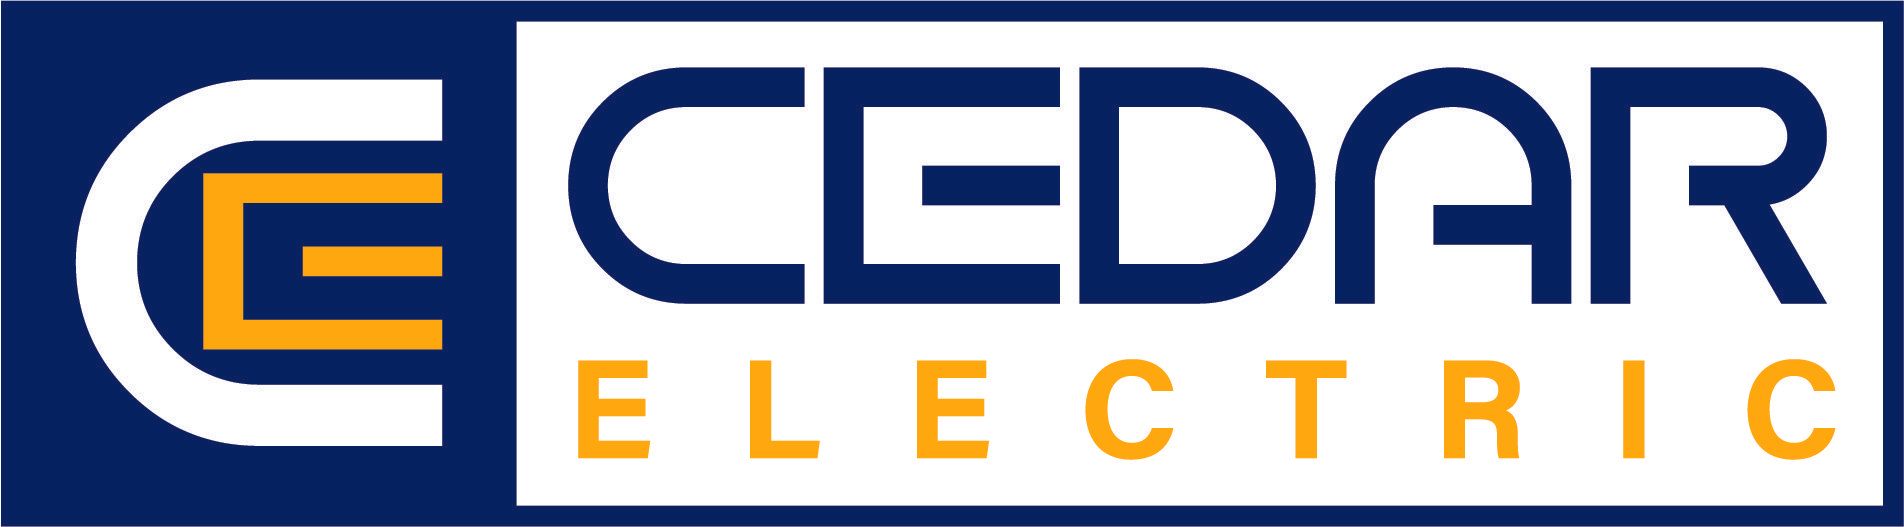 Cedar Electric Inc. - Logo